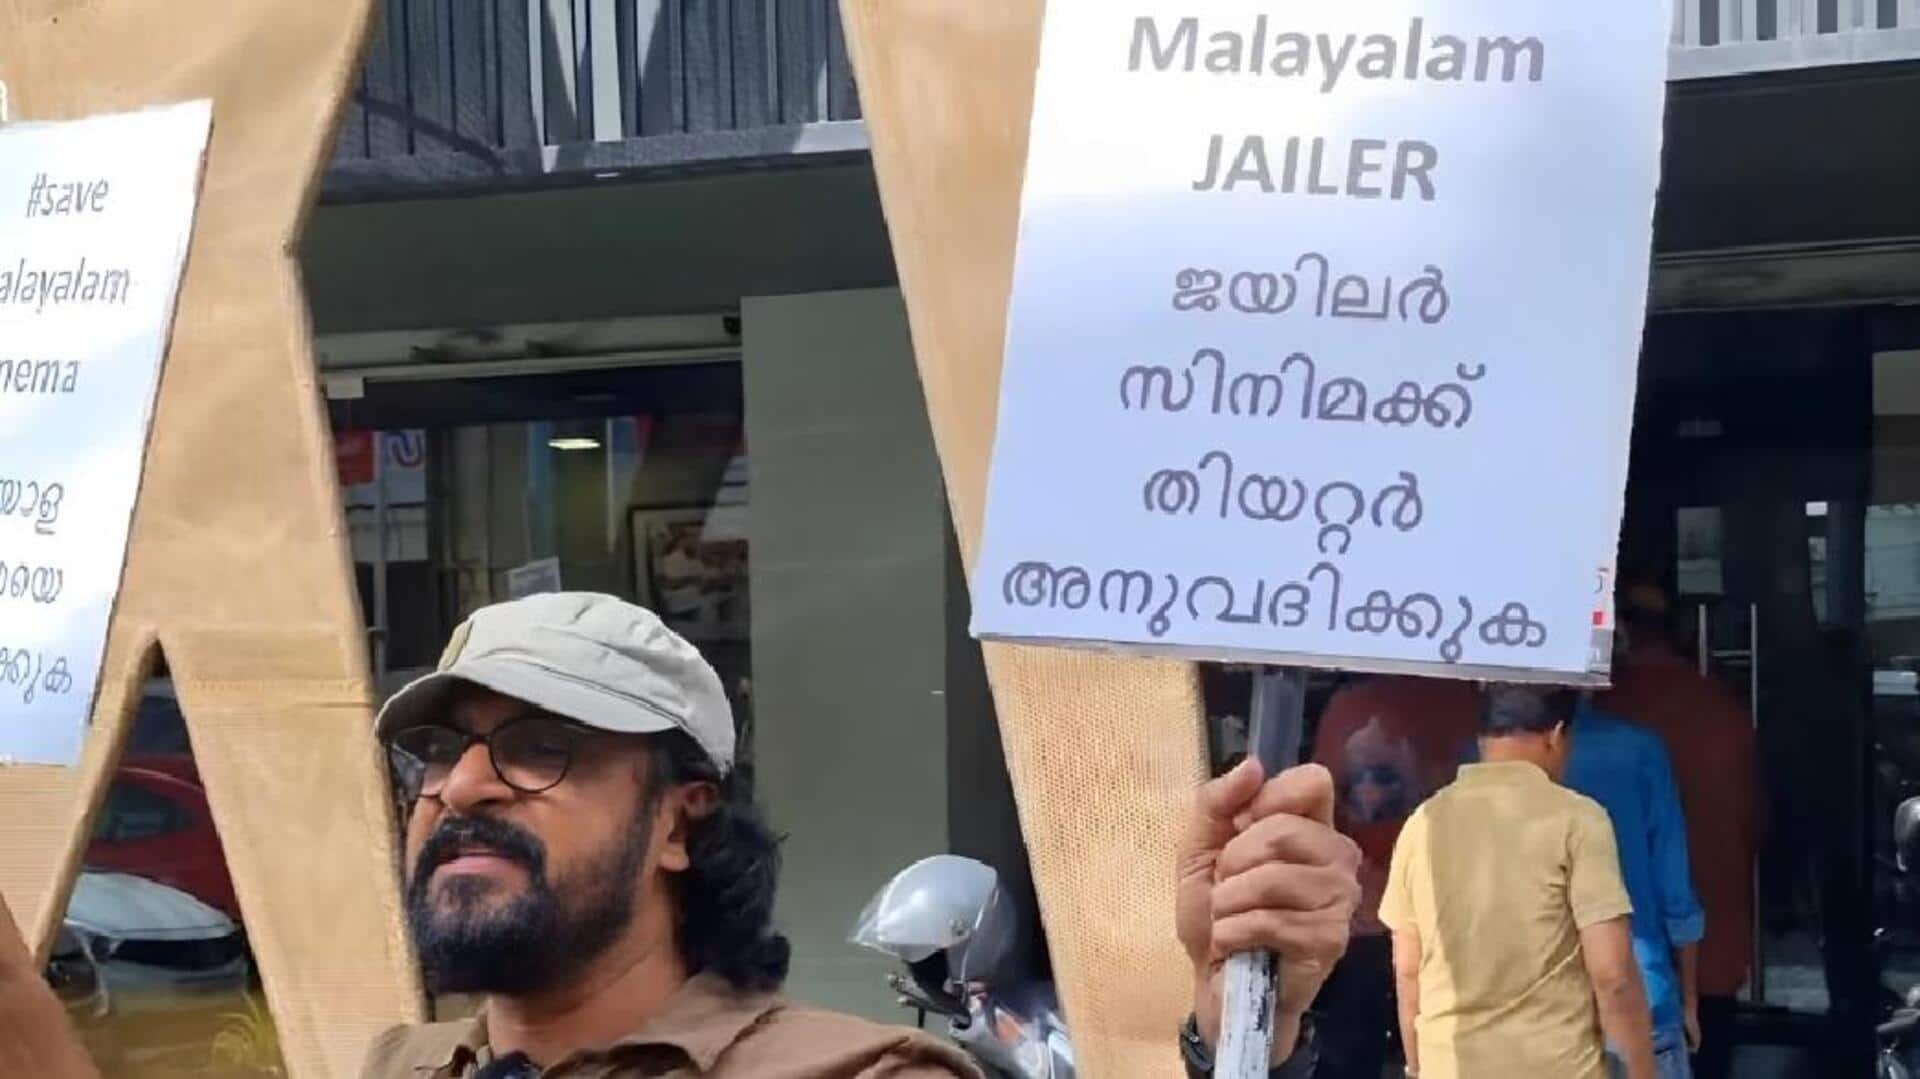 'Jailer': Sakkir Madathil protests against Rajinikanth's film over distribution issues